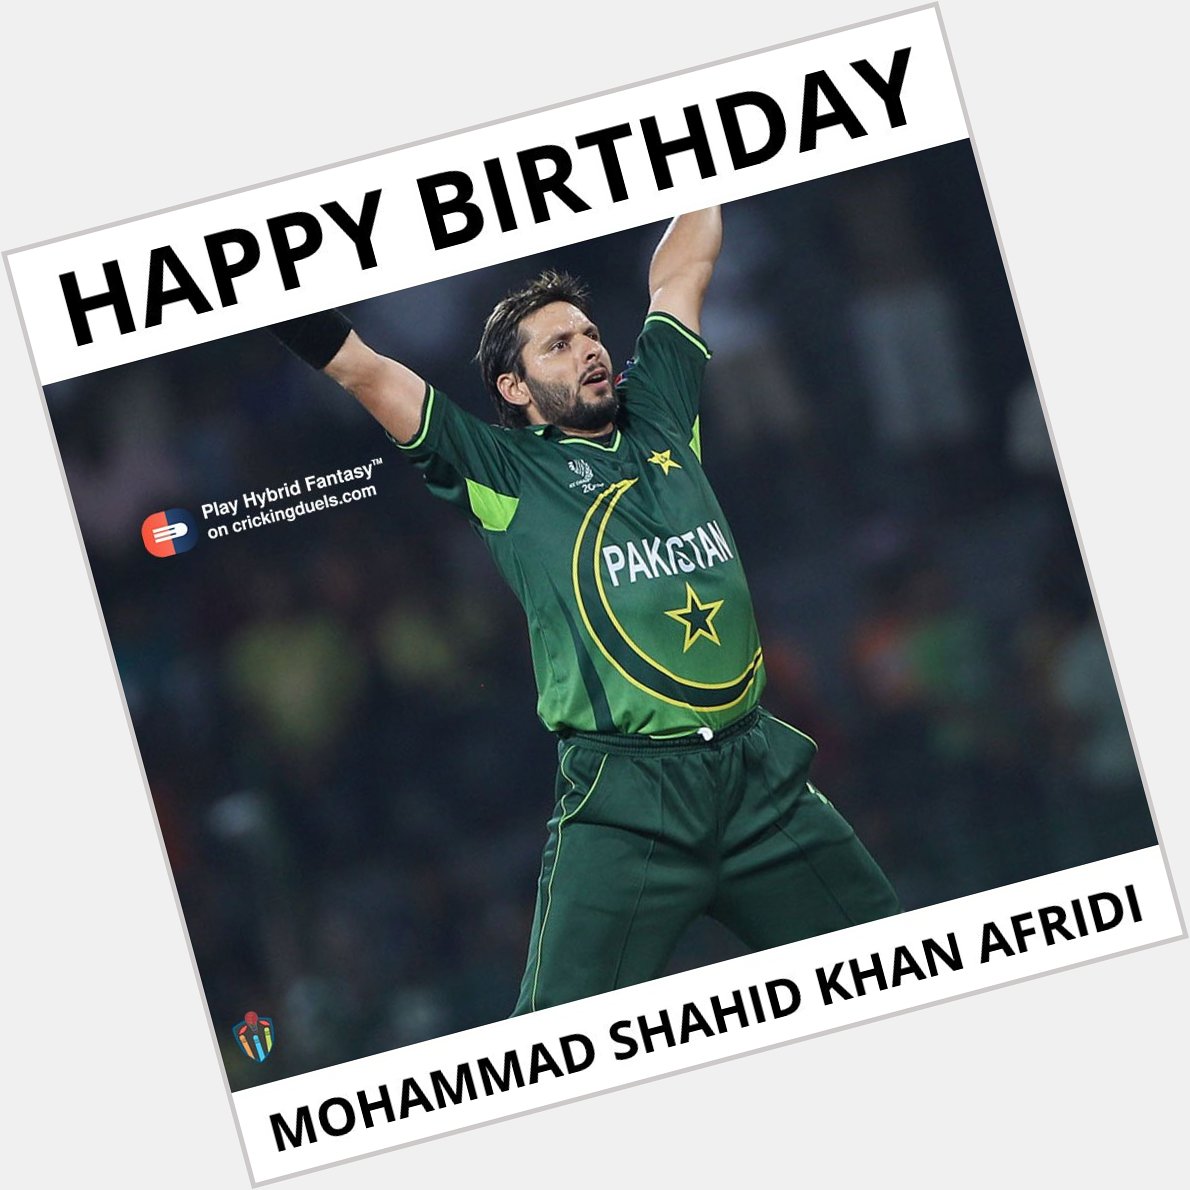 Happy birthday, Shahid Afridi! 